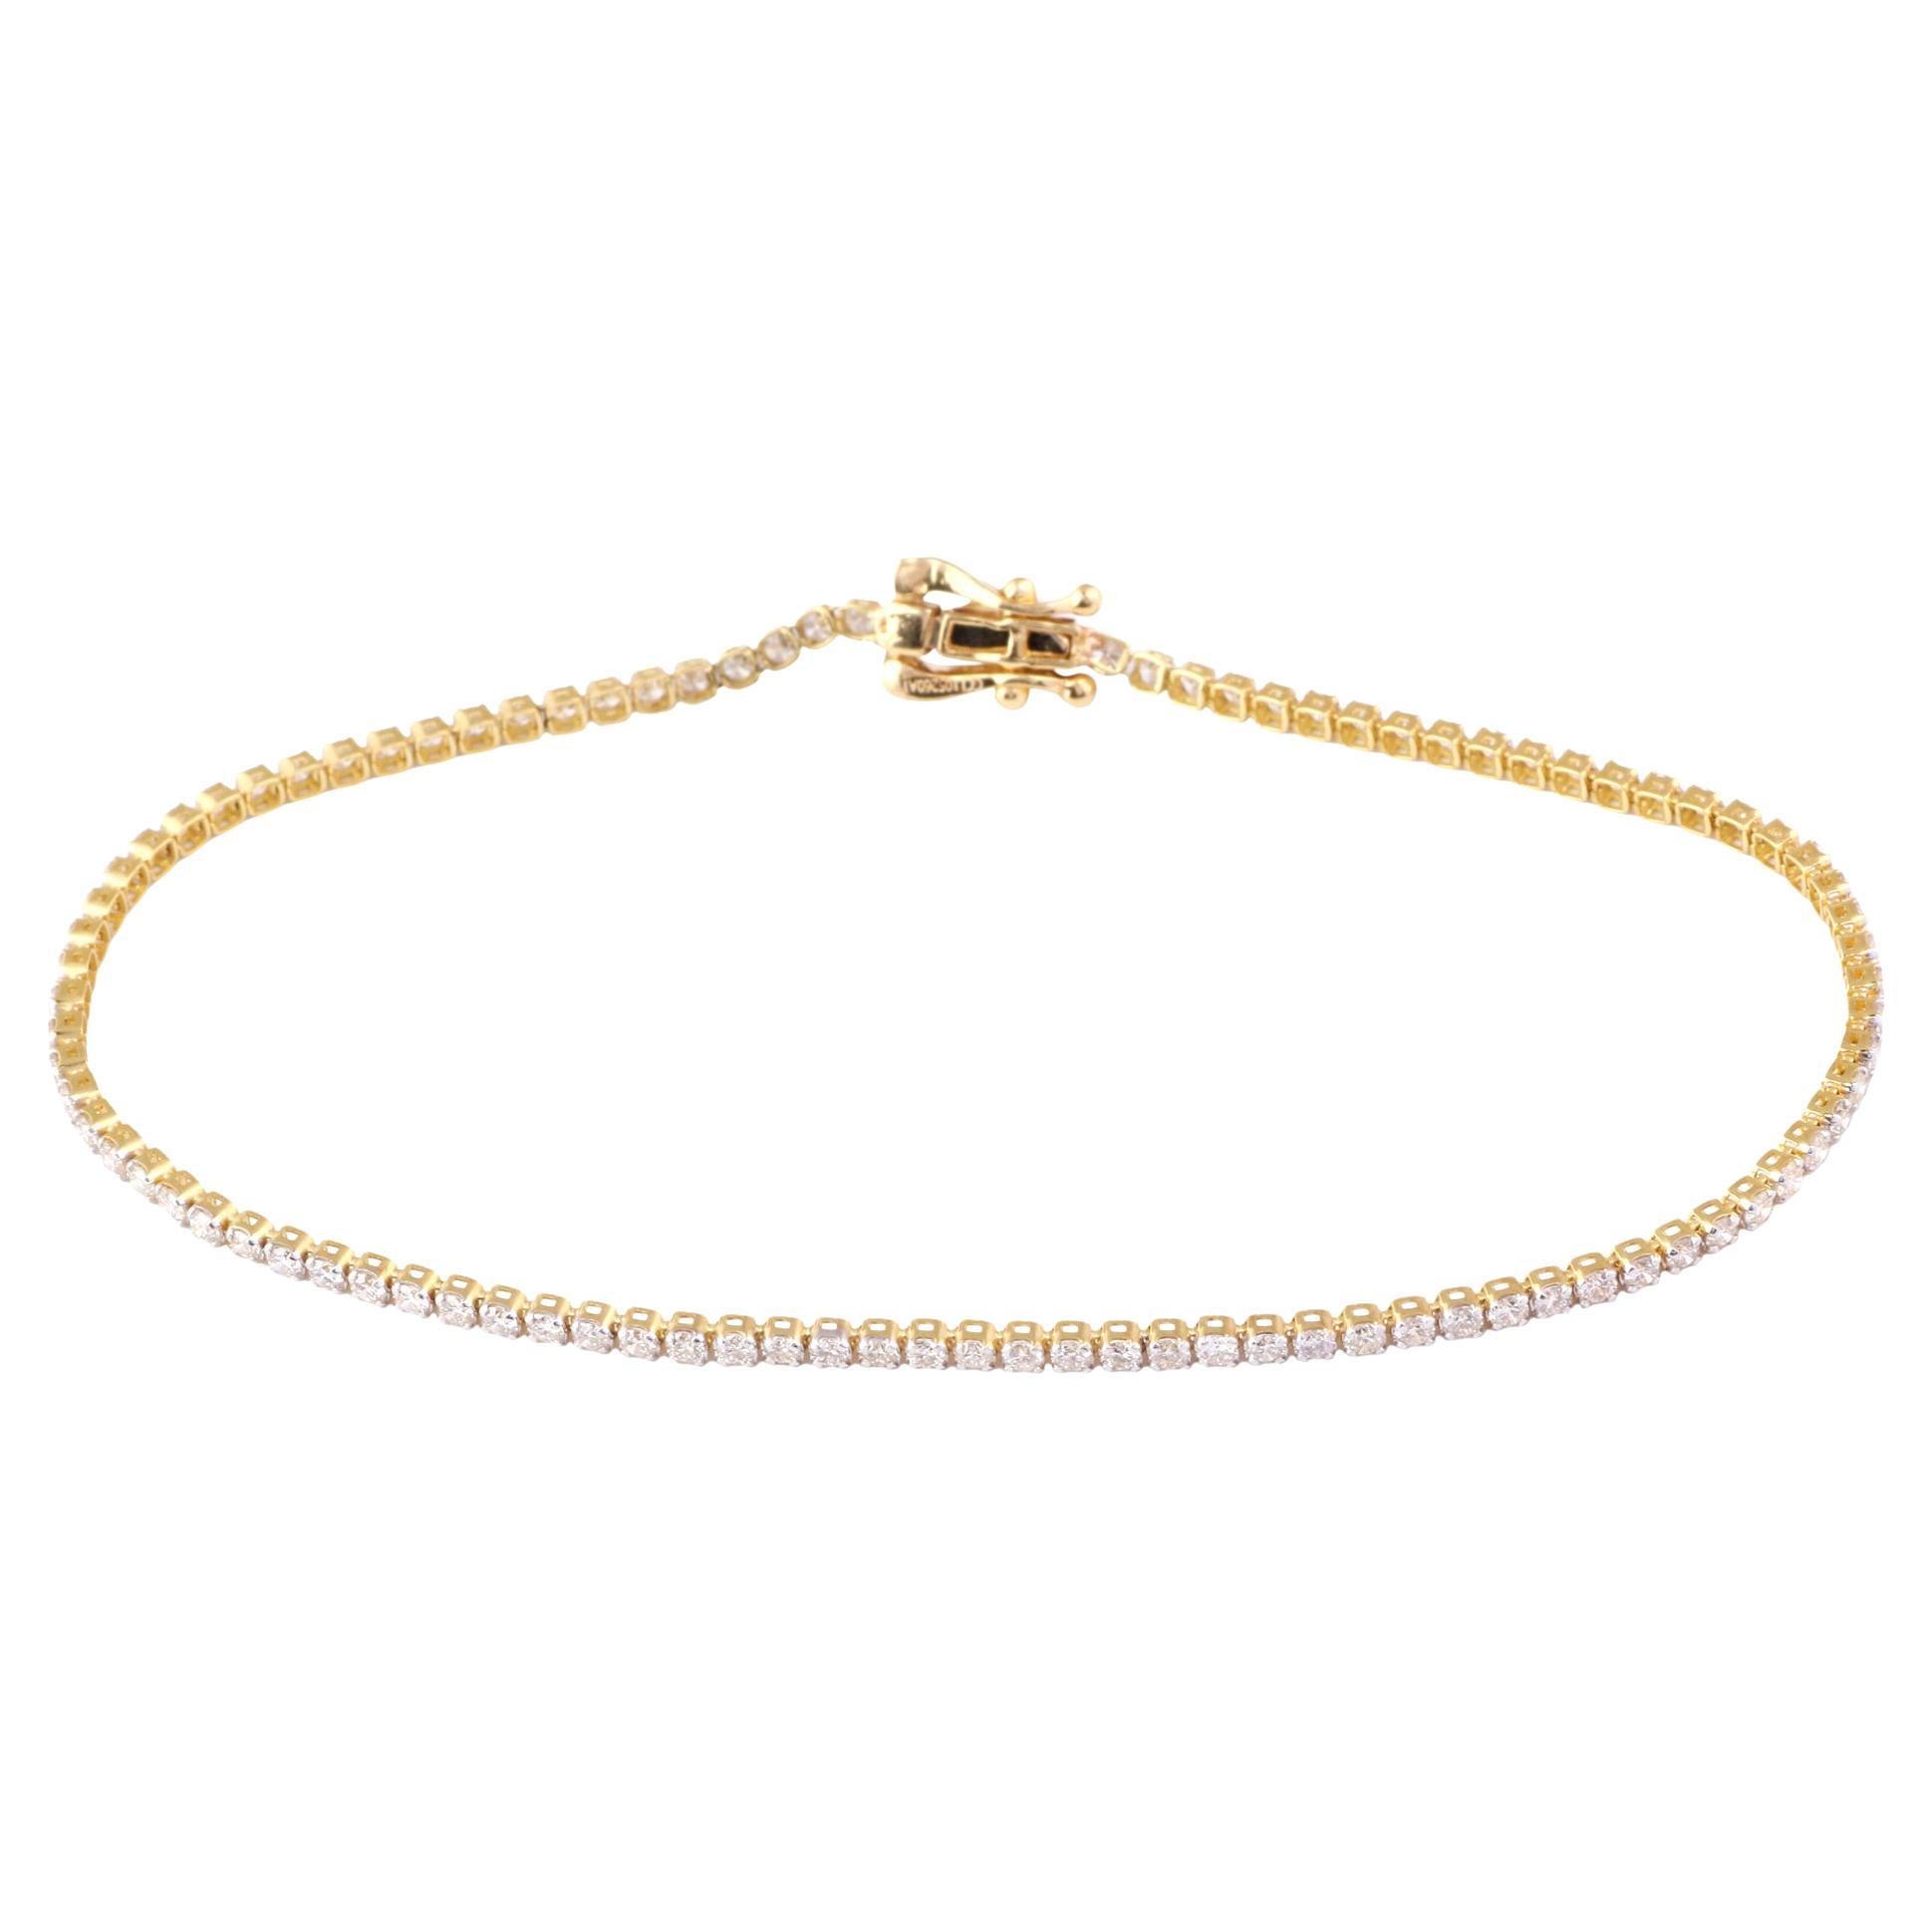 Bracelet à chaîne en or jaune 18 carats avec diamants naturels transparents certifiés IGI de 1,34 carat